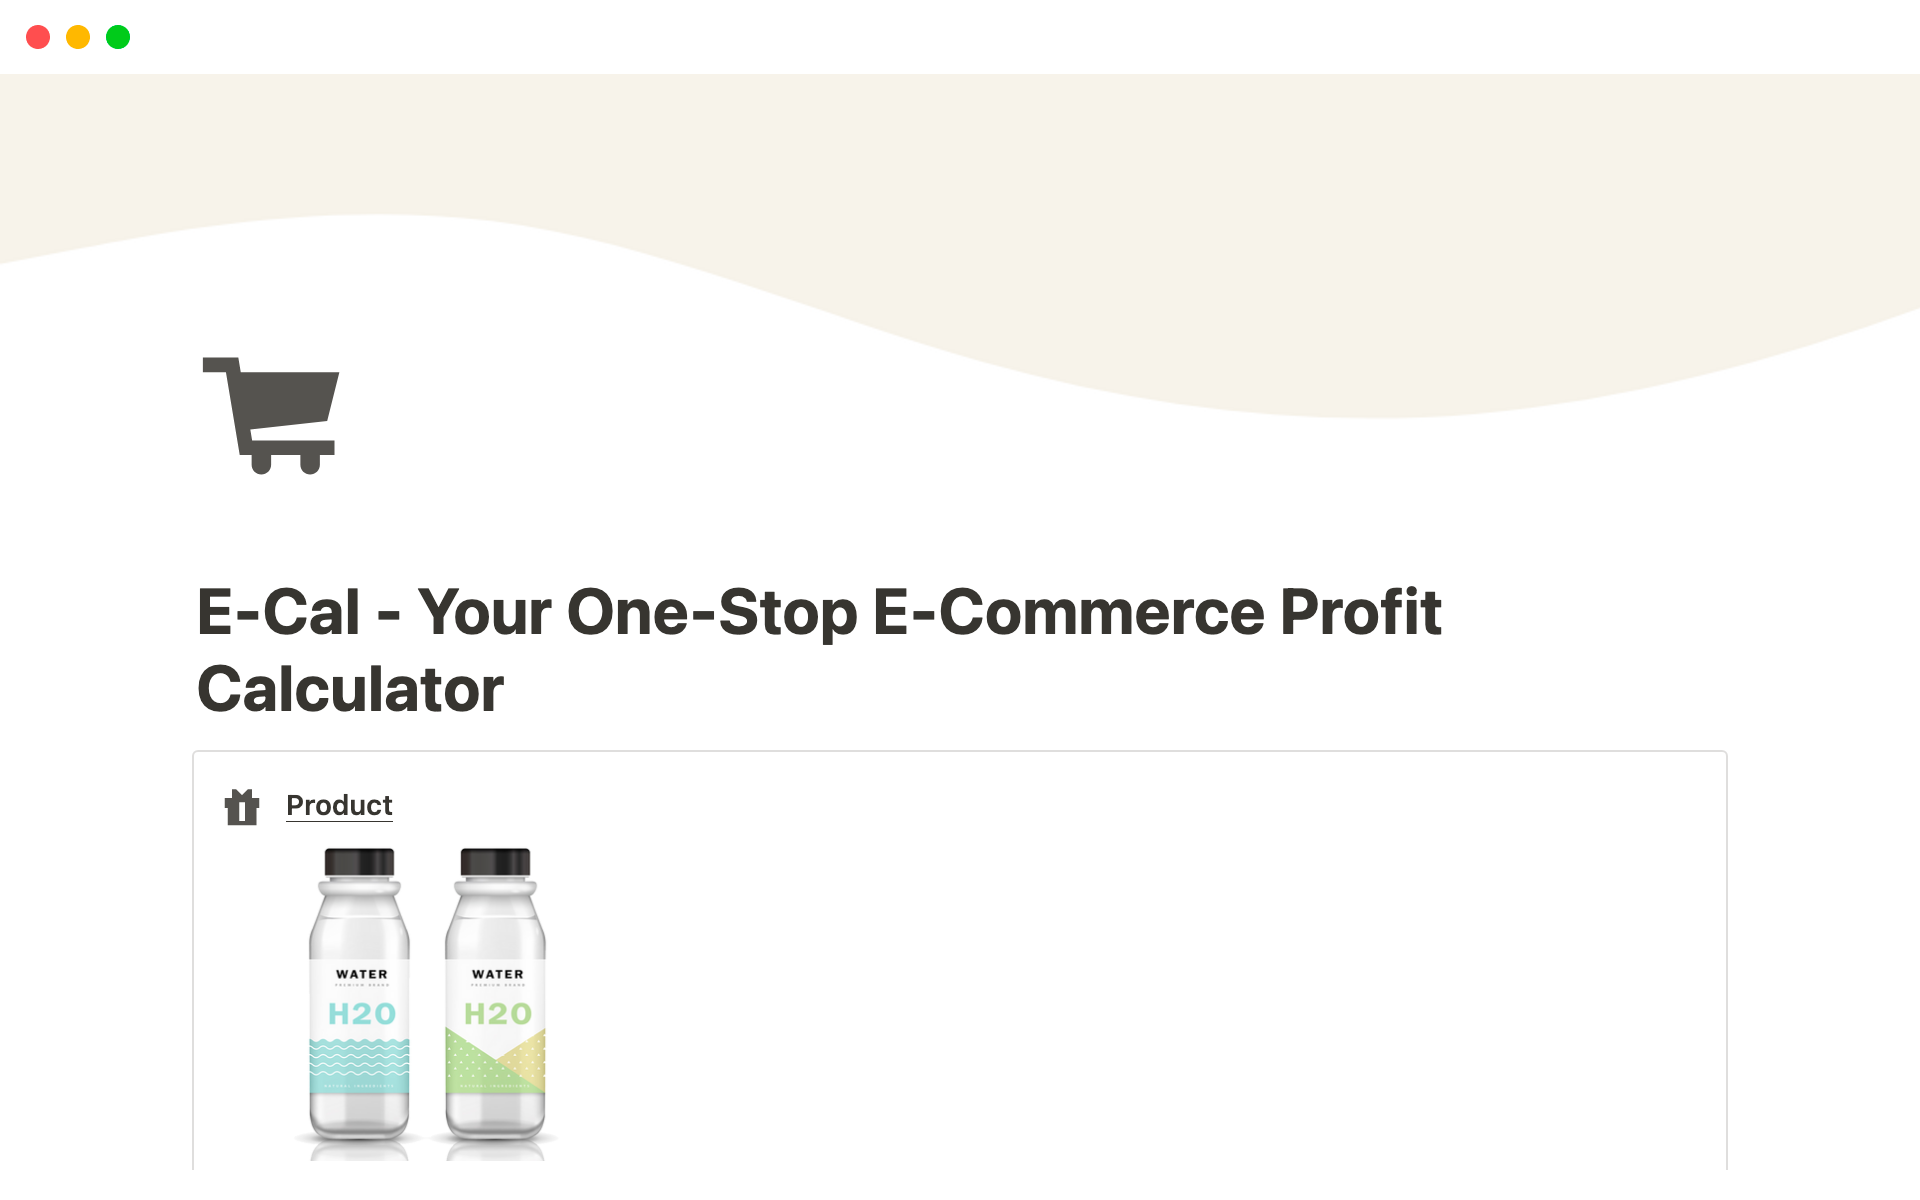 Vista previa de plantilla para E-Cal - Your One-Stop E-Commerce Profit Calculator